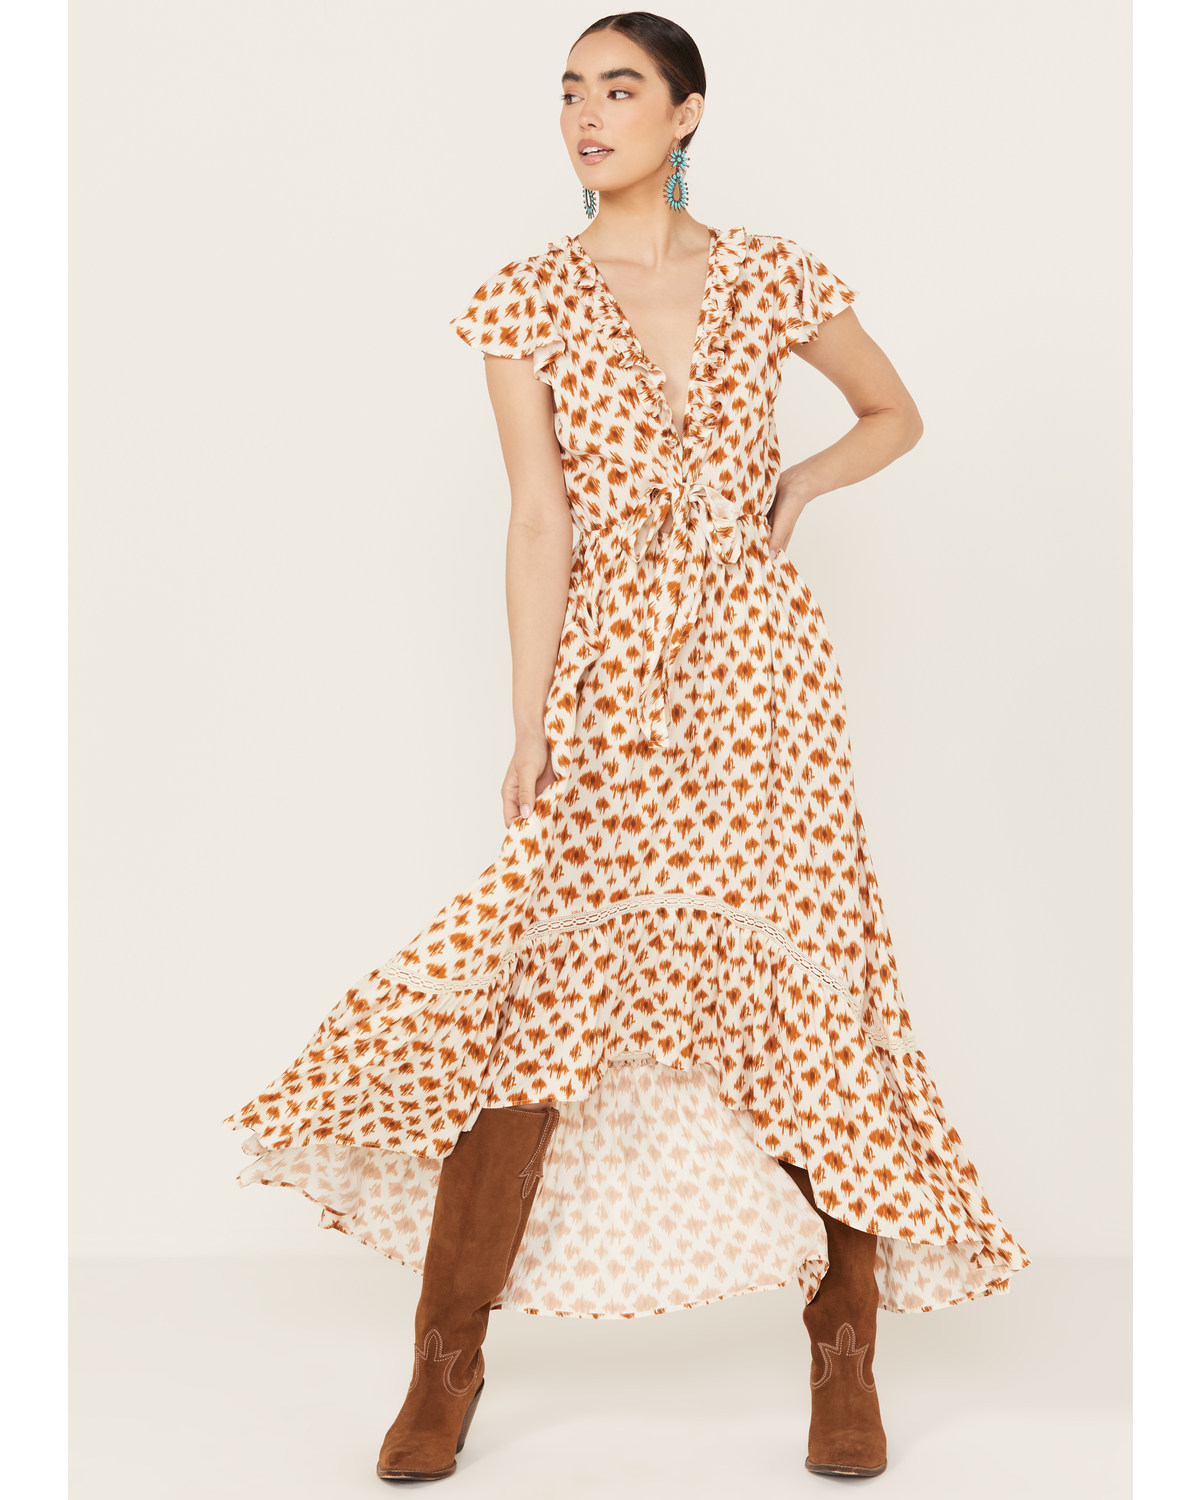 Beyond The Radar Women's Ikat Print Picnic Dress